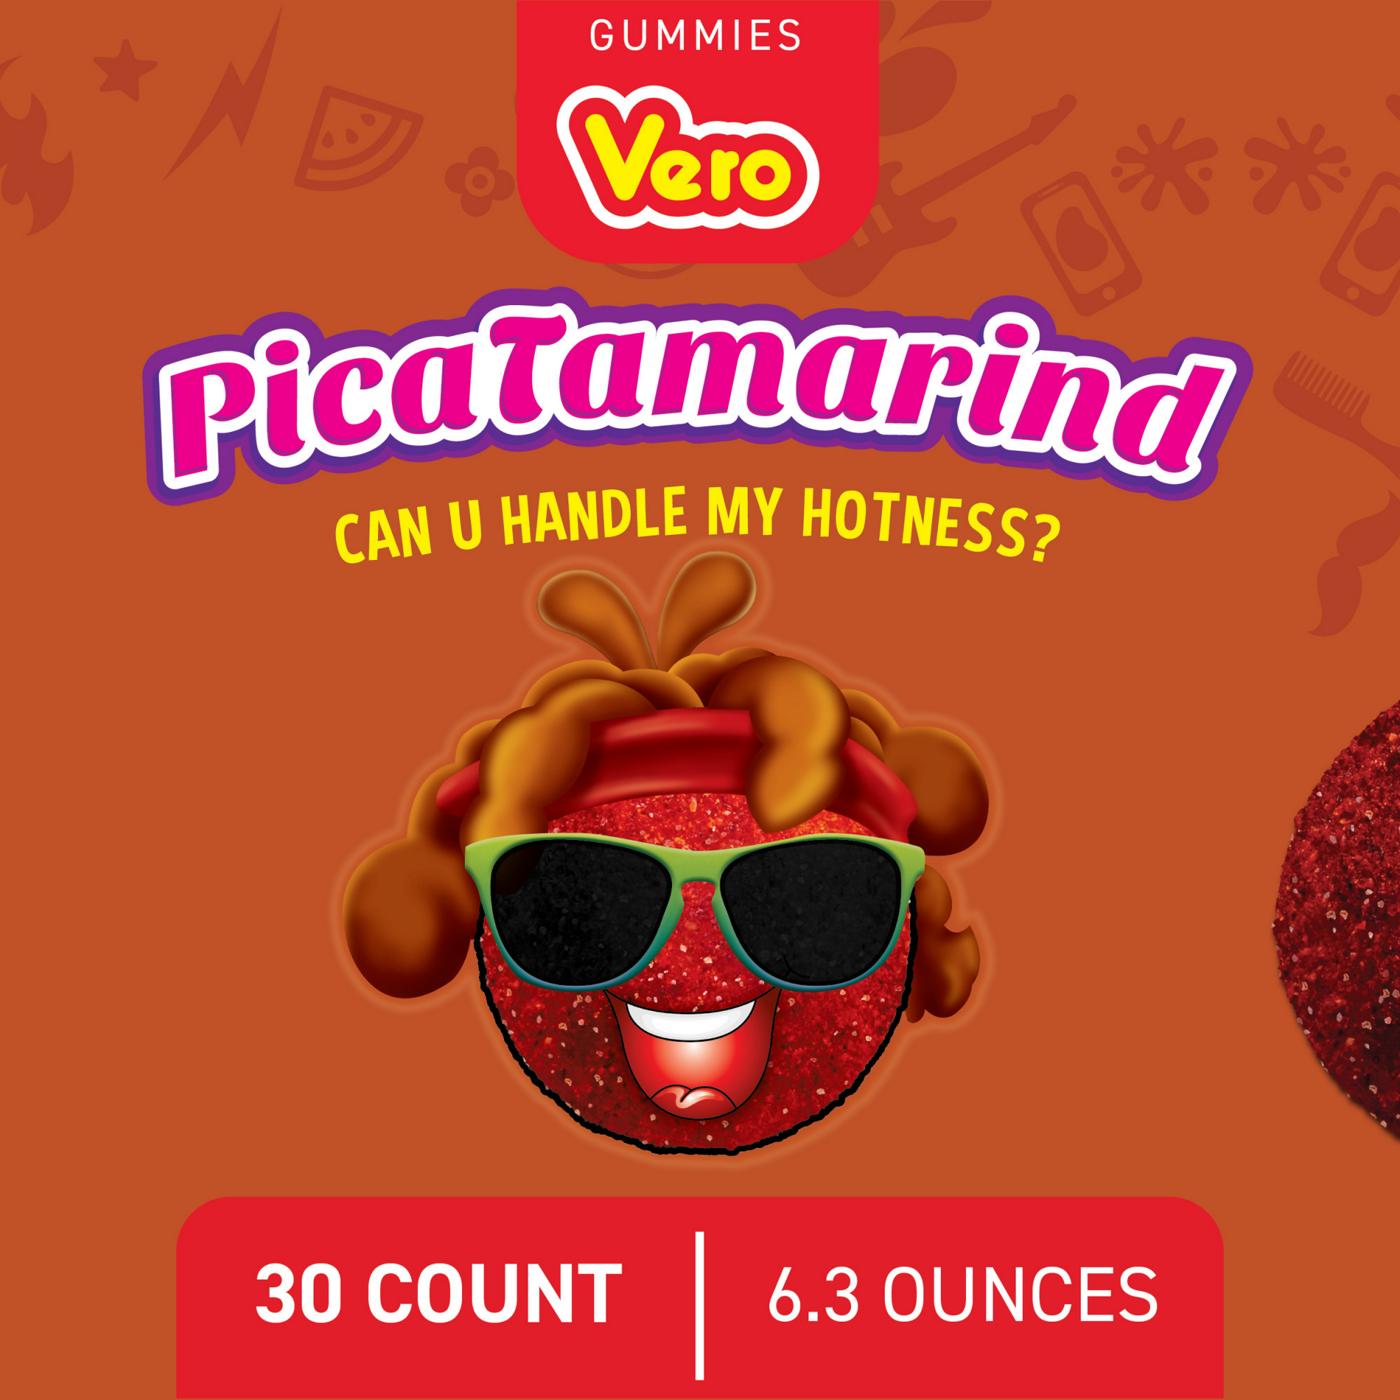 Vero Picatamarind Tamarind Chewy Candy; image 4 of 5